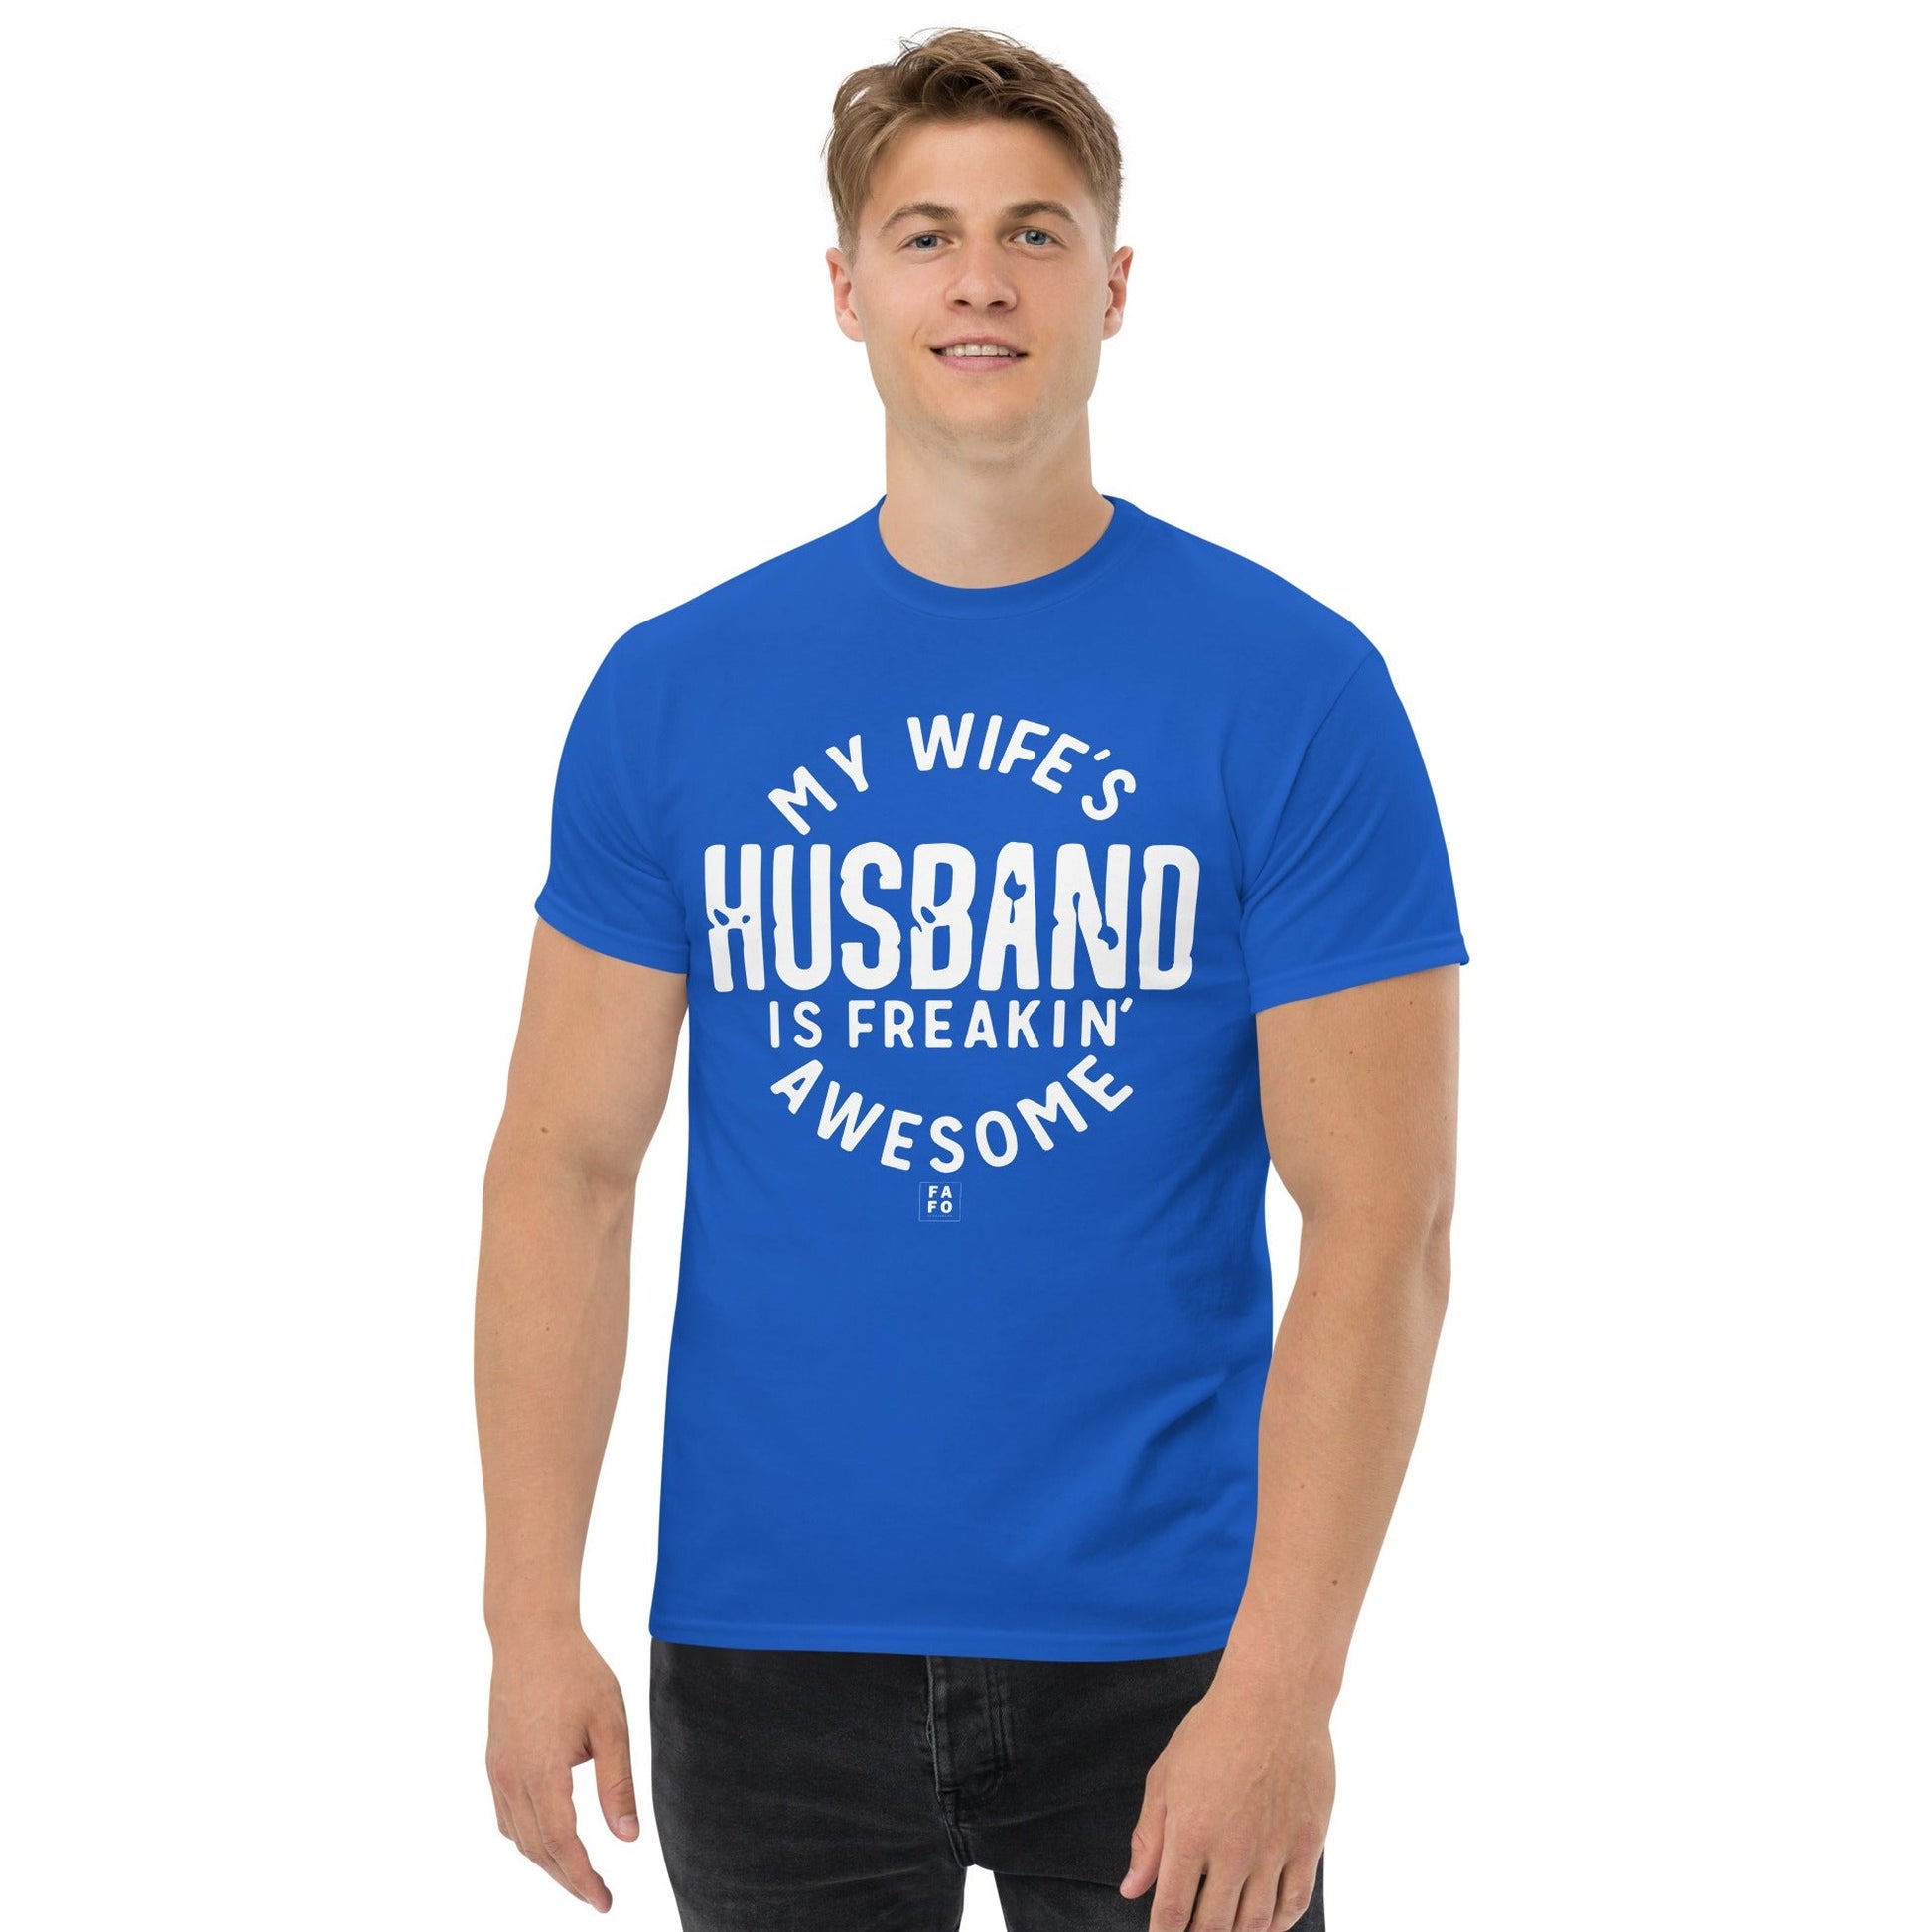 Men's Tee - My Wife's Husband is Awesome - FAFO Sportswear